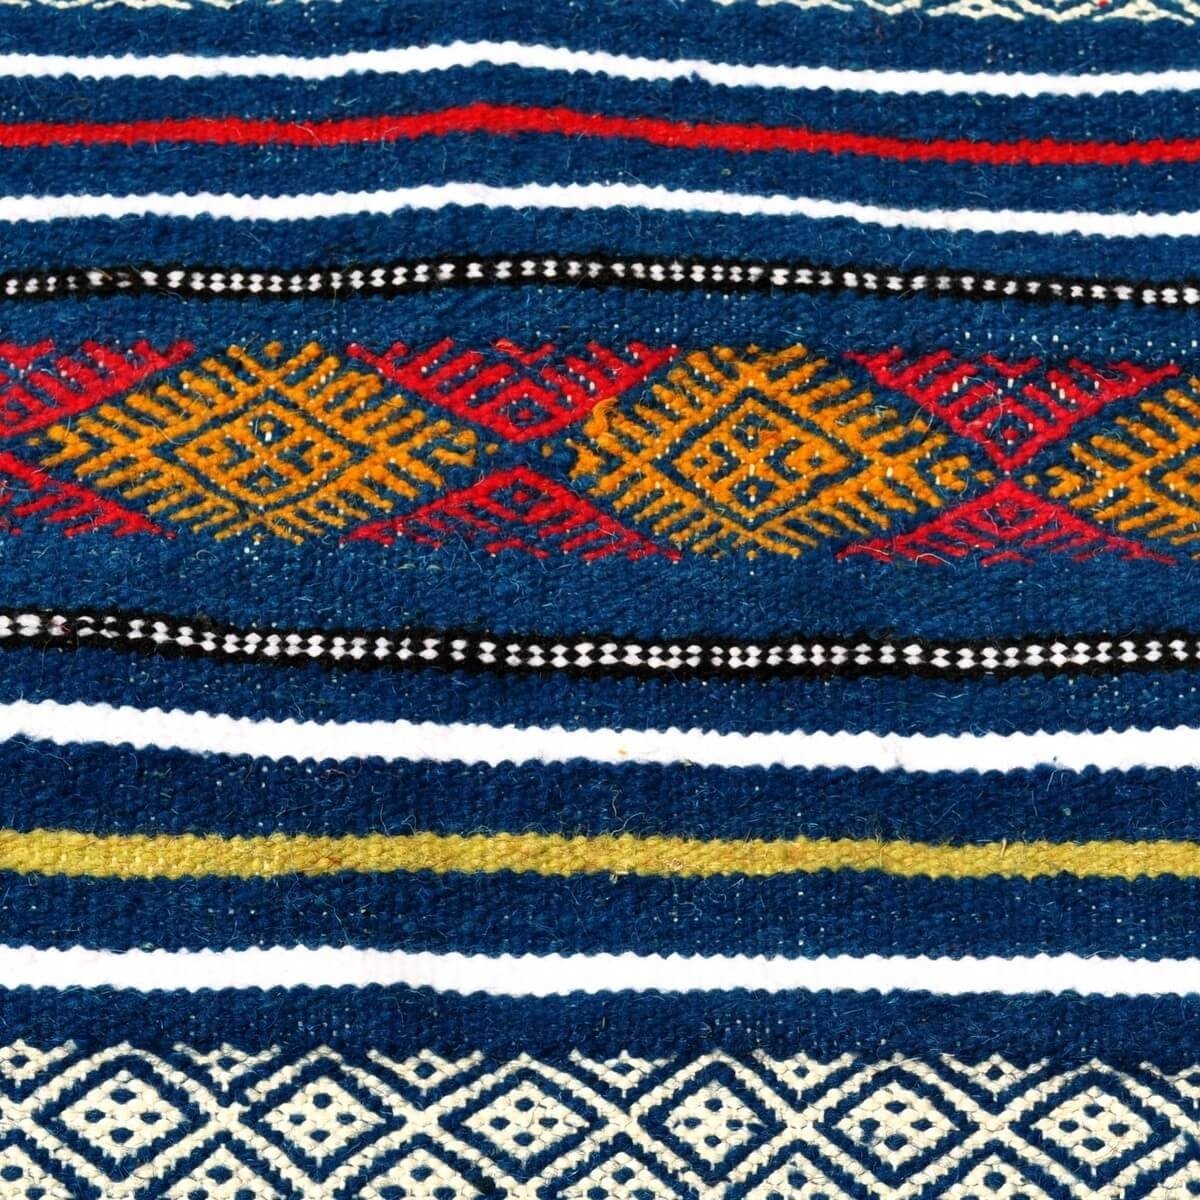 Berber tapijt Tapijt Kilim Bargou 100x190 Blauw/Jeel/Rood (Handgeweven, Wol, Tunesië) Tunesisch kilimdeken, Marokkaanse stijl. R